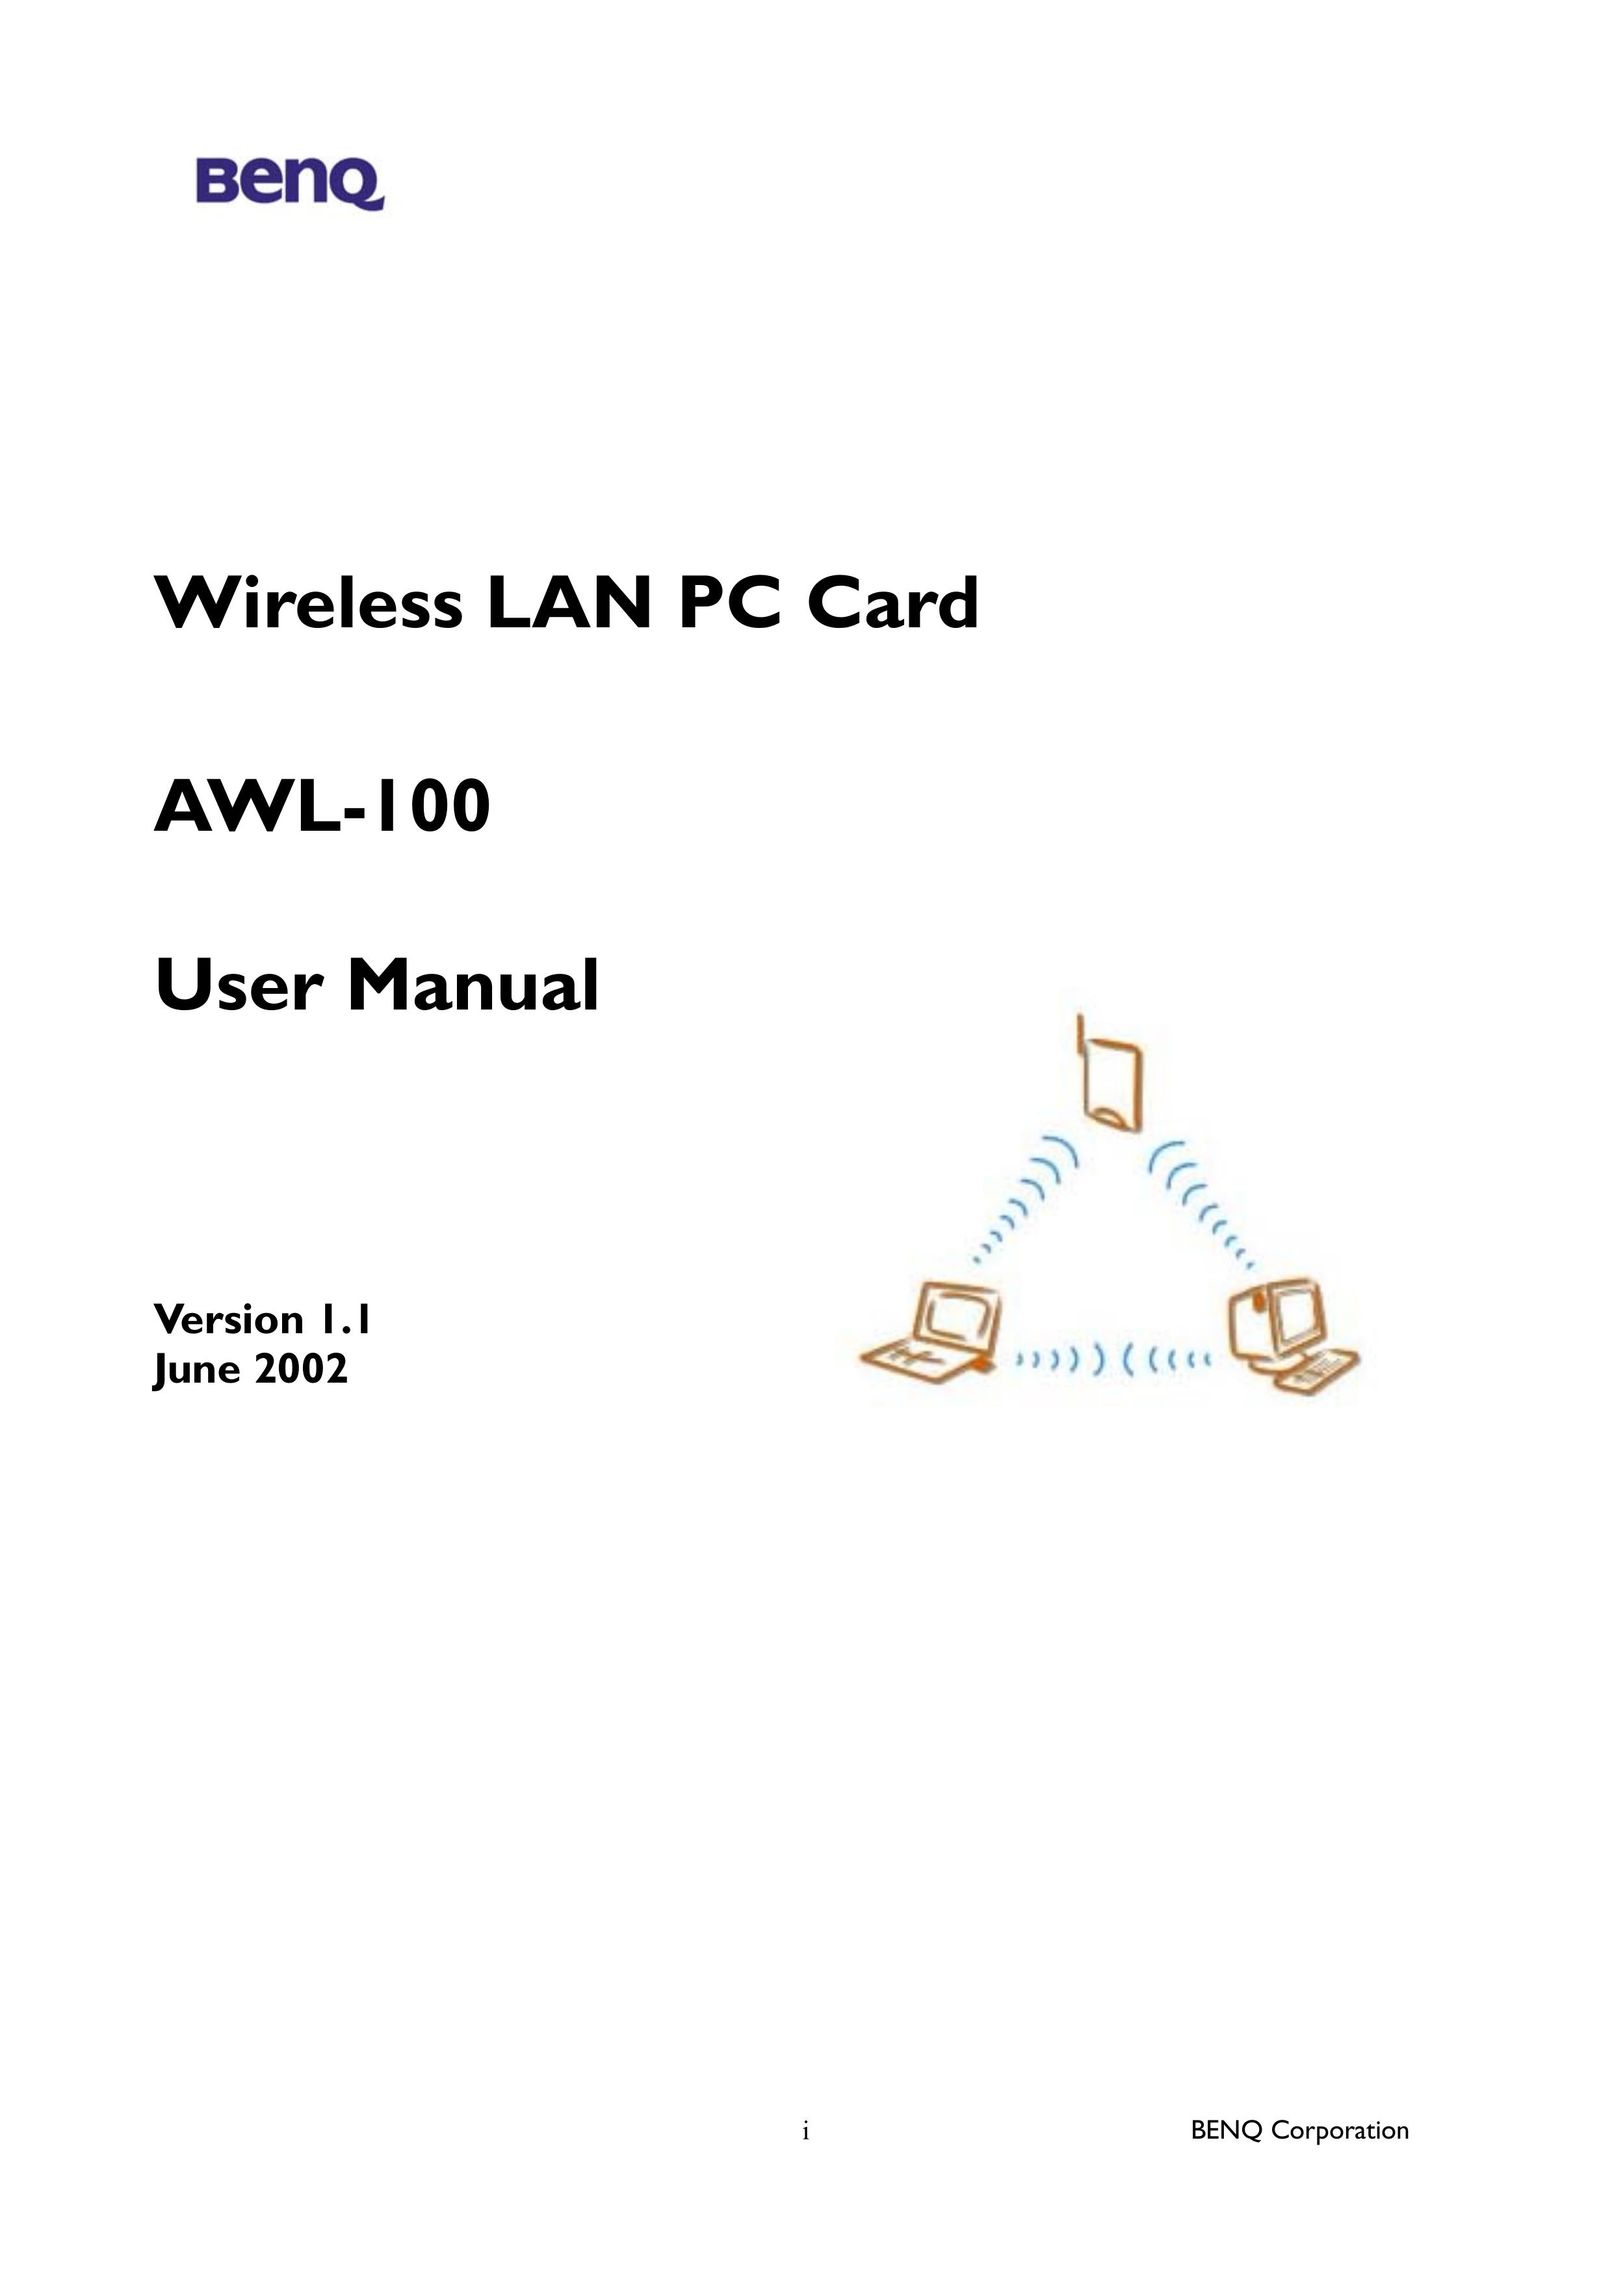 BenQ AWL-100 Network Card User Manual